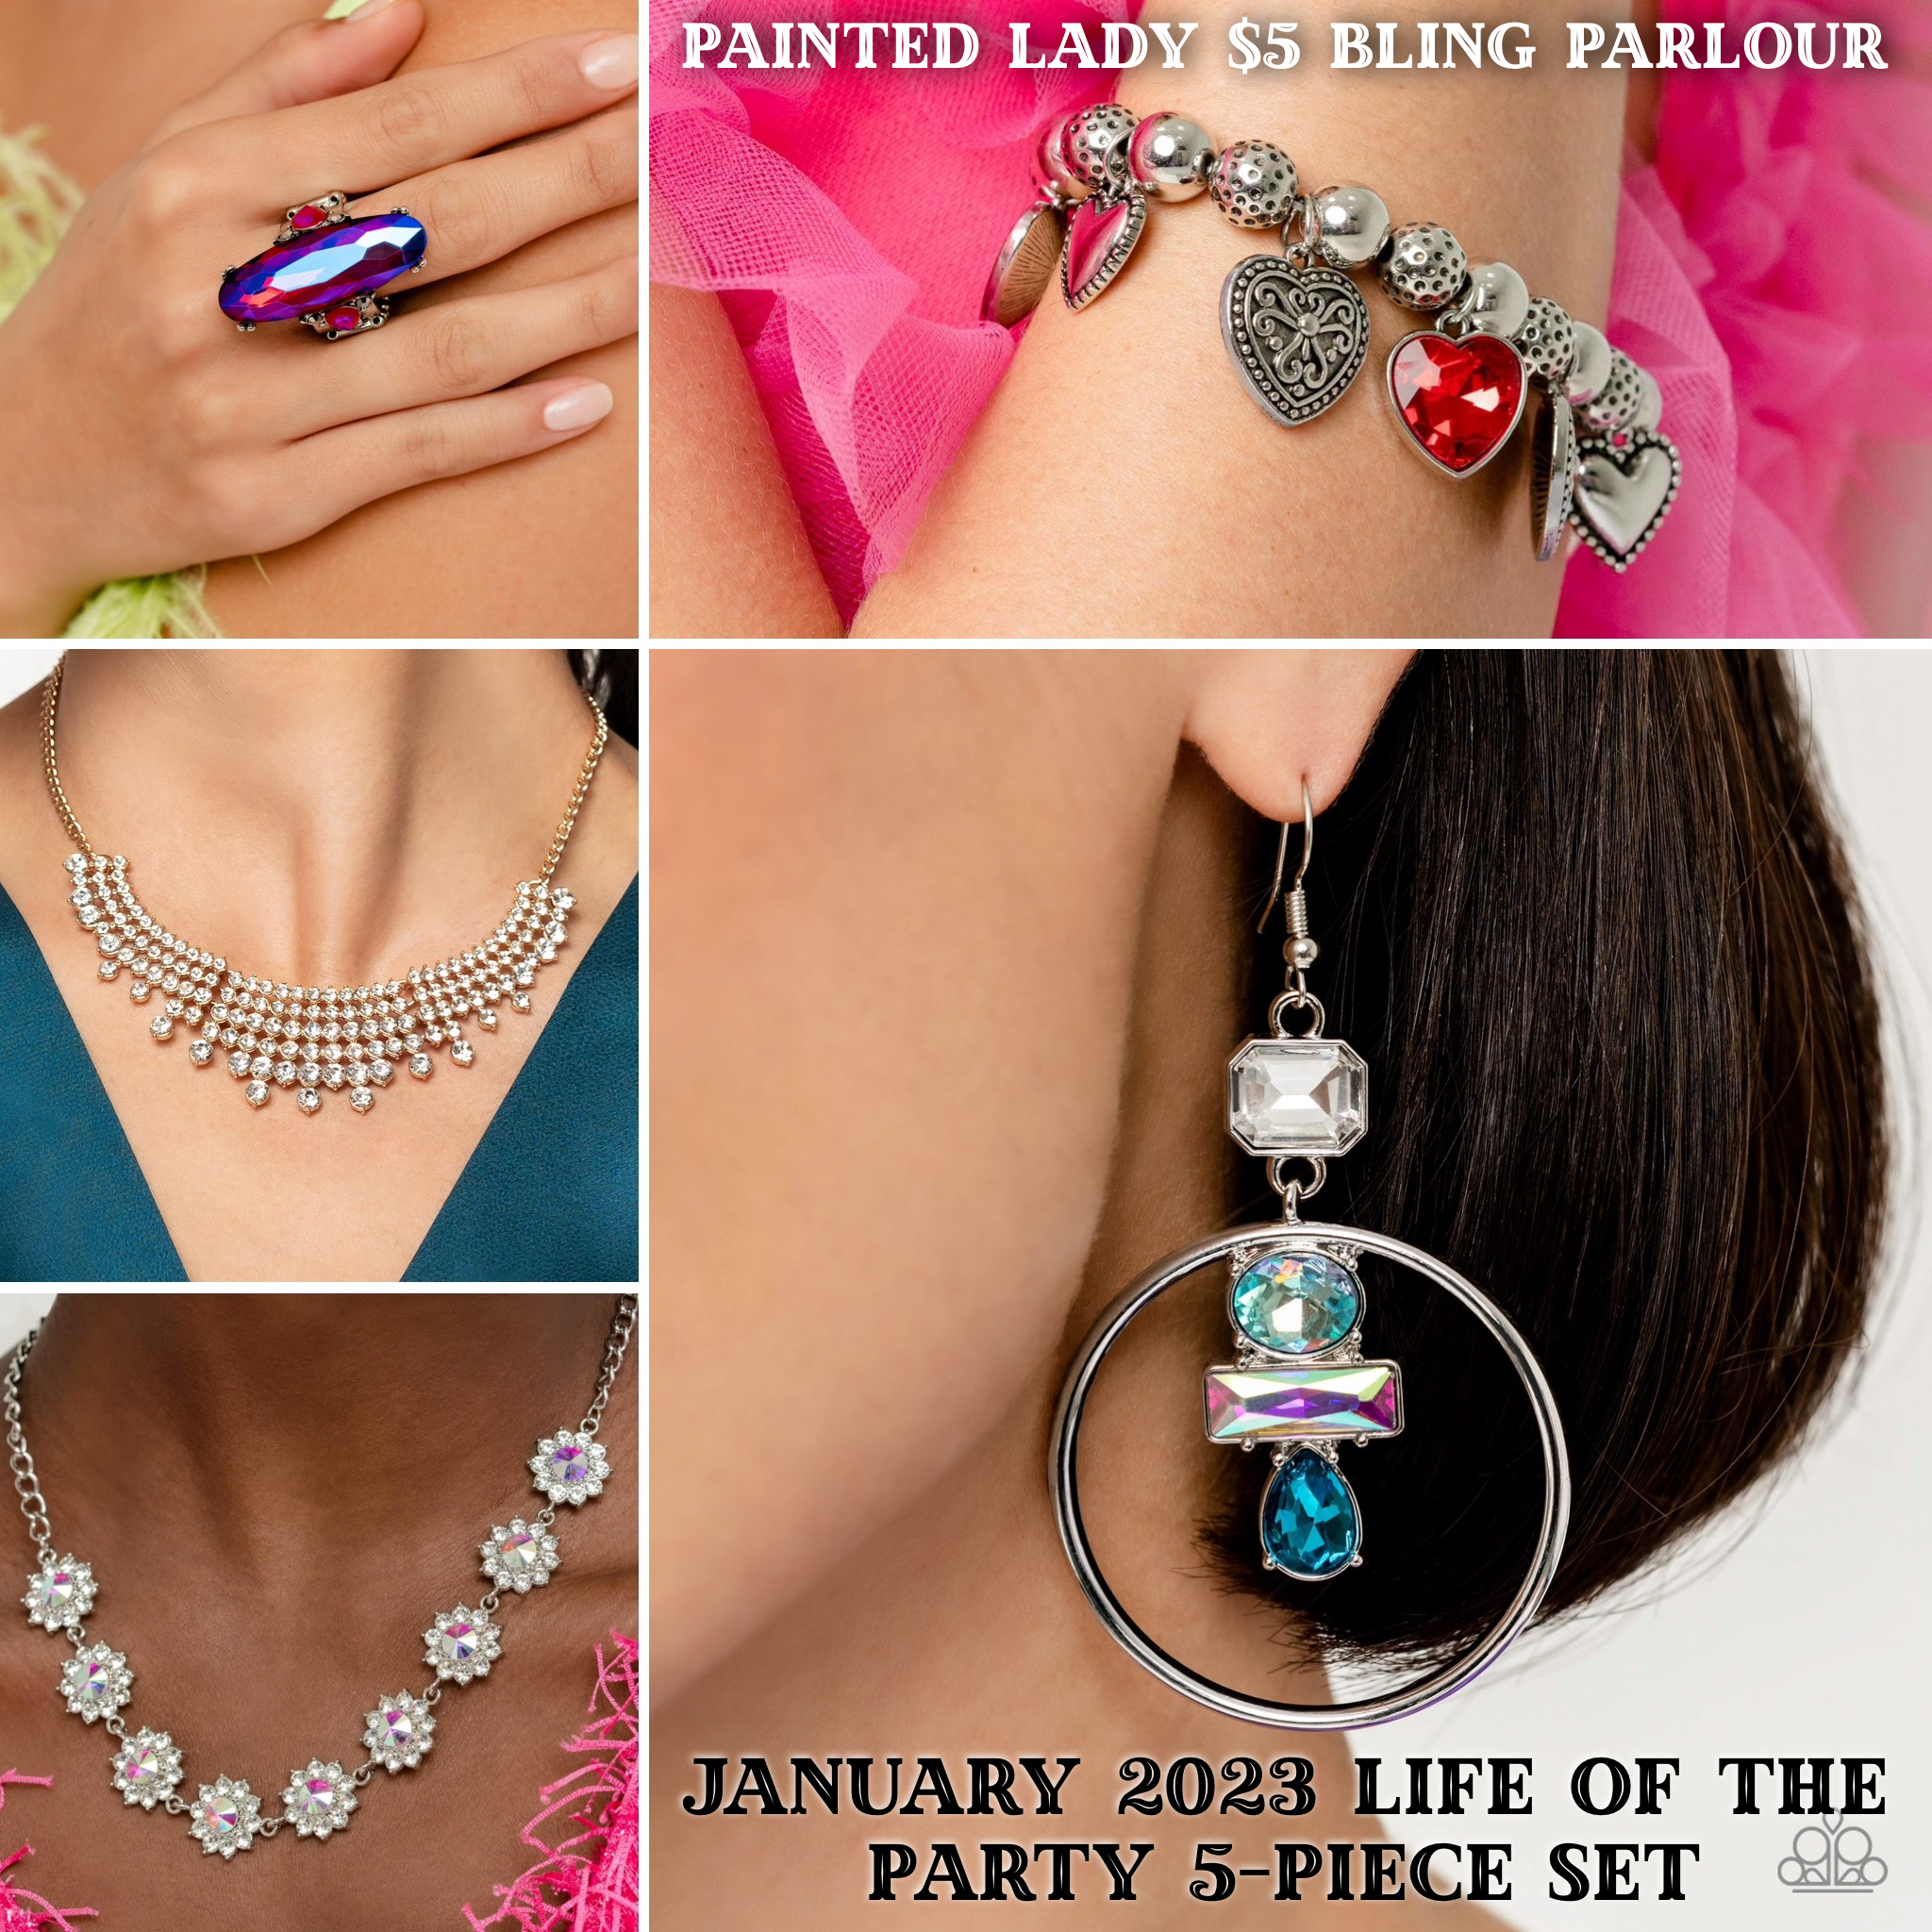 Paparazzi Jewelry Fashion Fix Exclusive Set Of 5 Pieces. January 2022